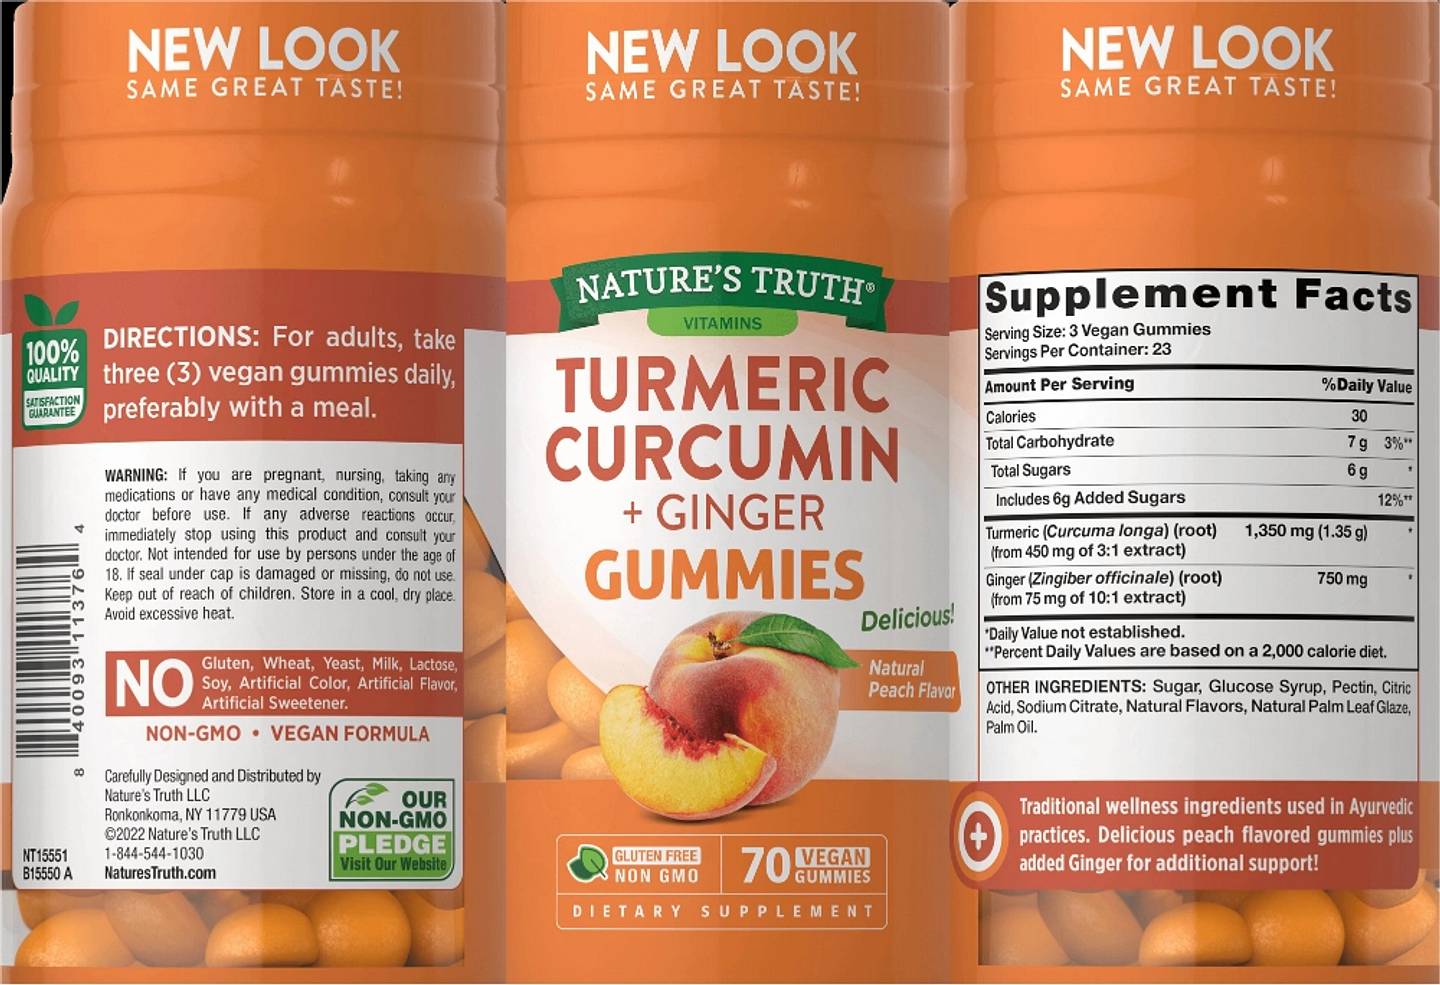 Nature's Truth, Turmeric Curcumin + Ginger label